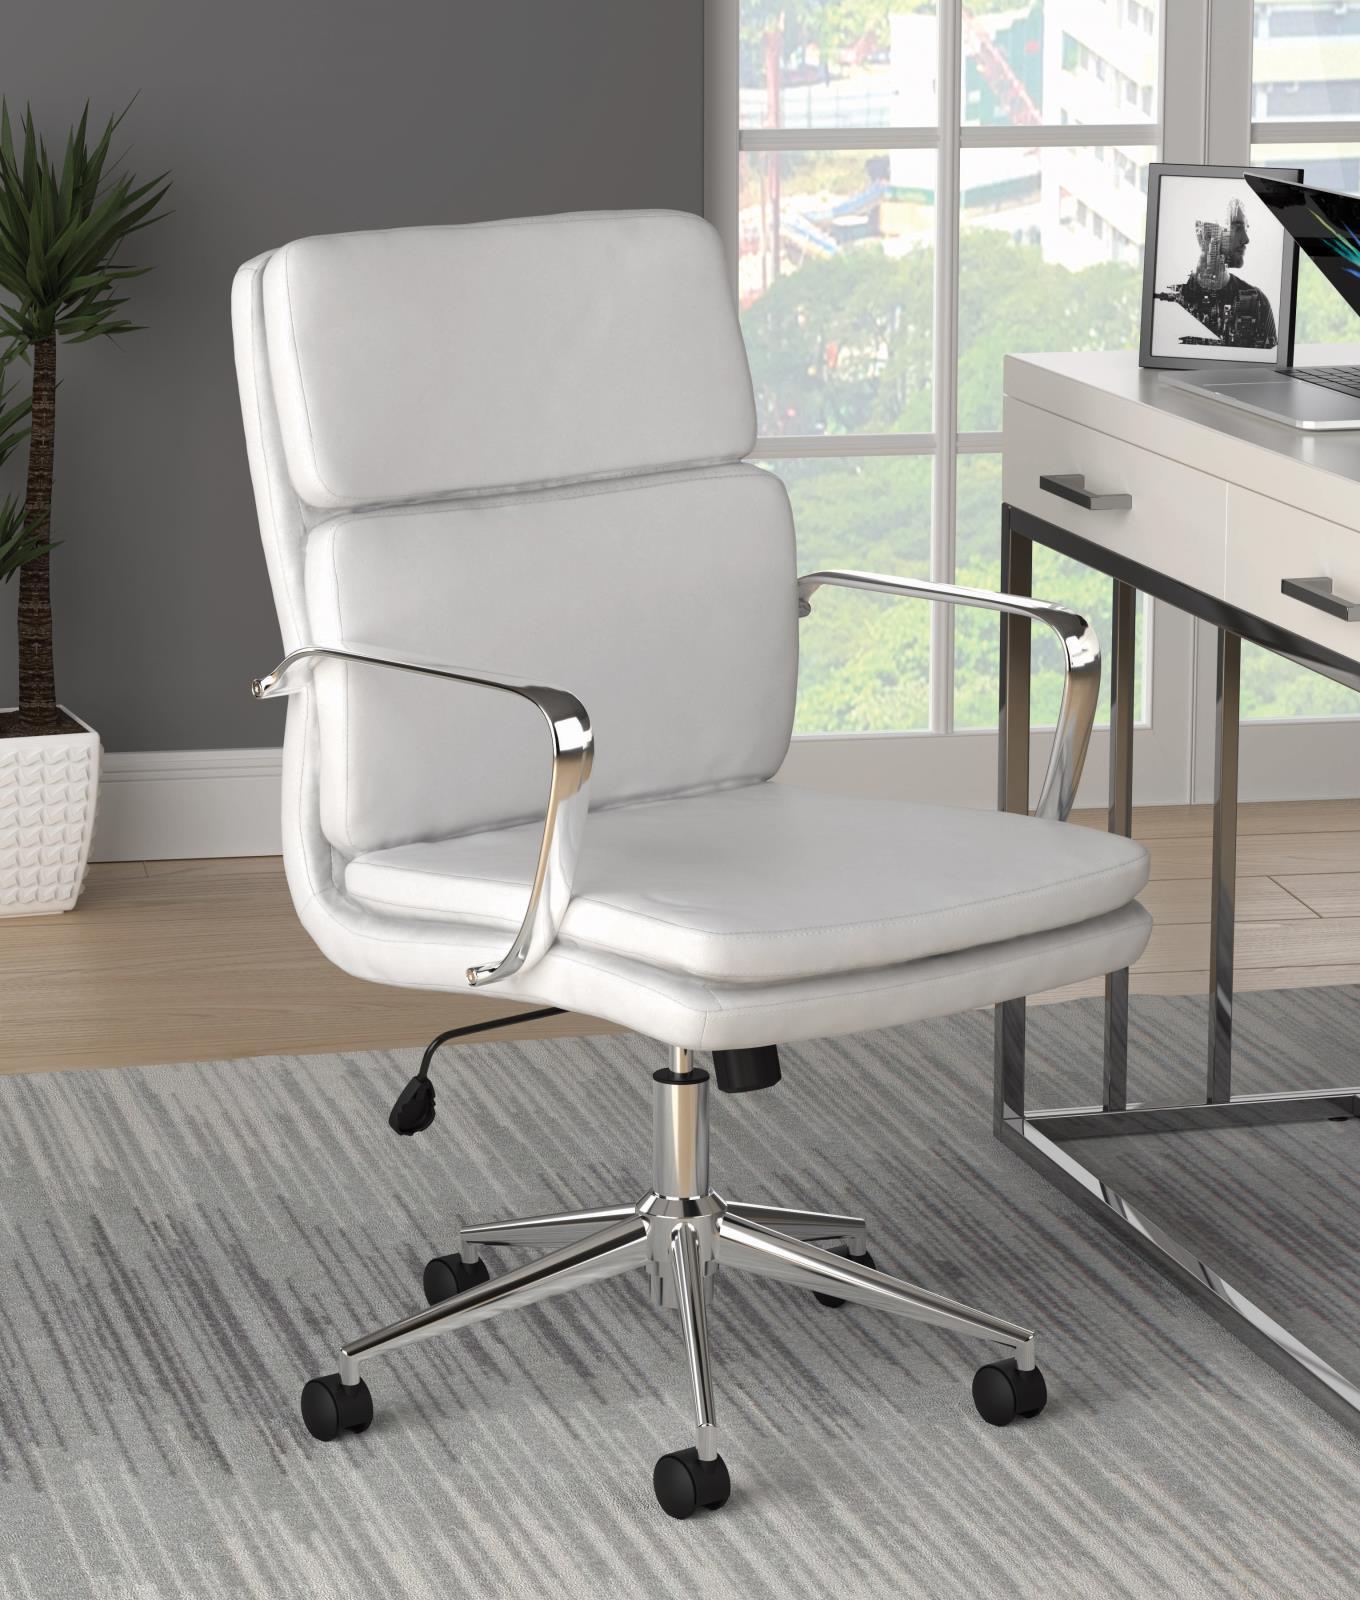 G801744 Office Chair - Half Price Furniture